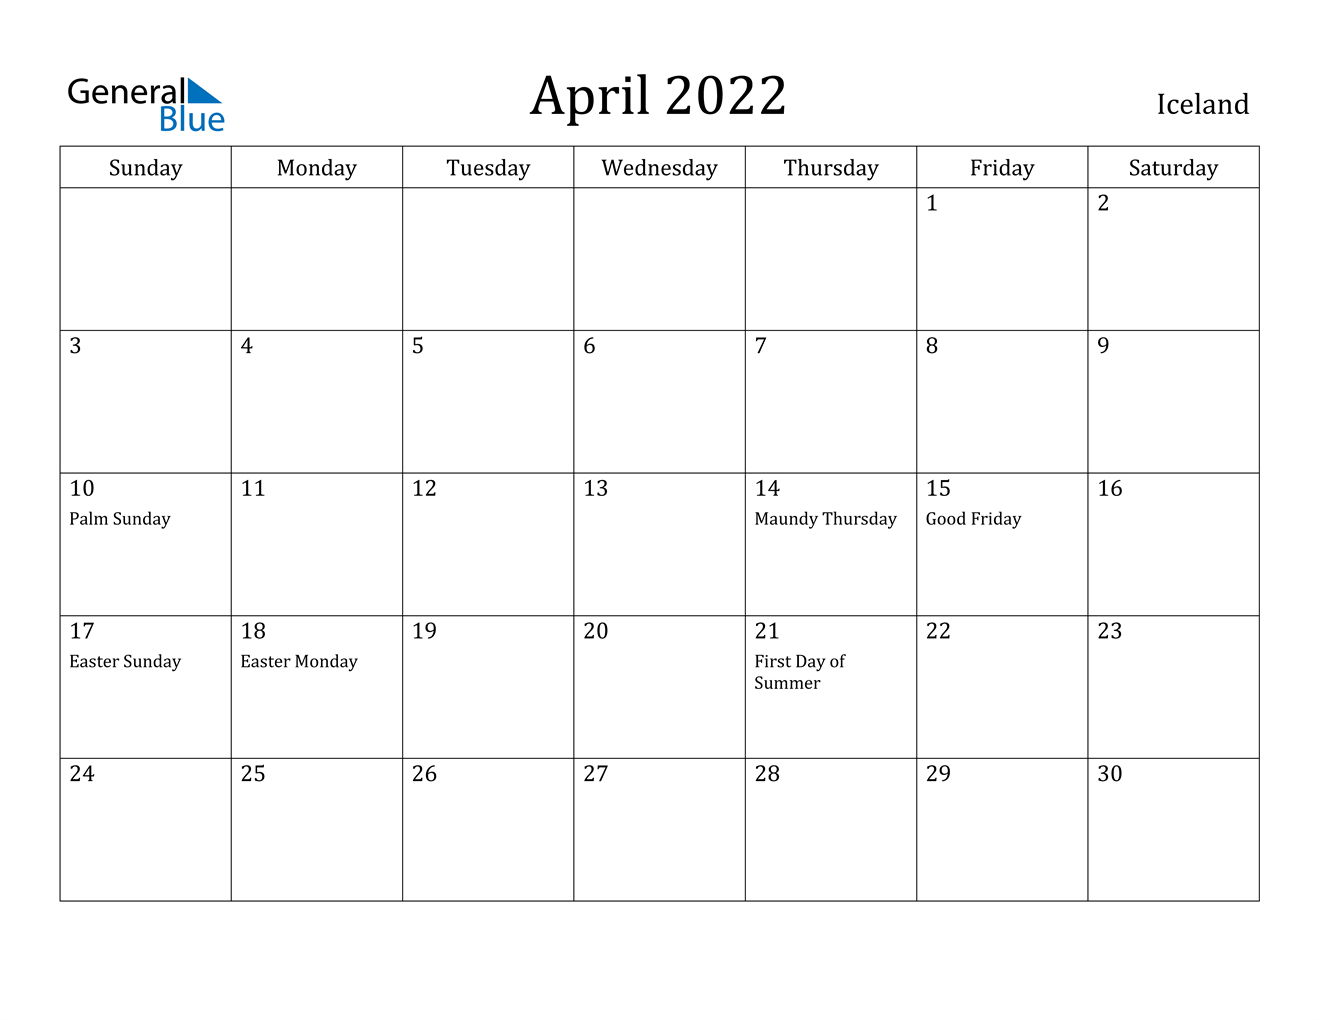 April 2022 Calendar - Iceland